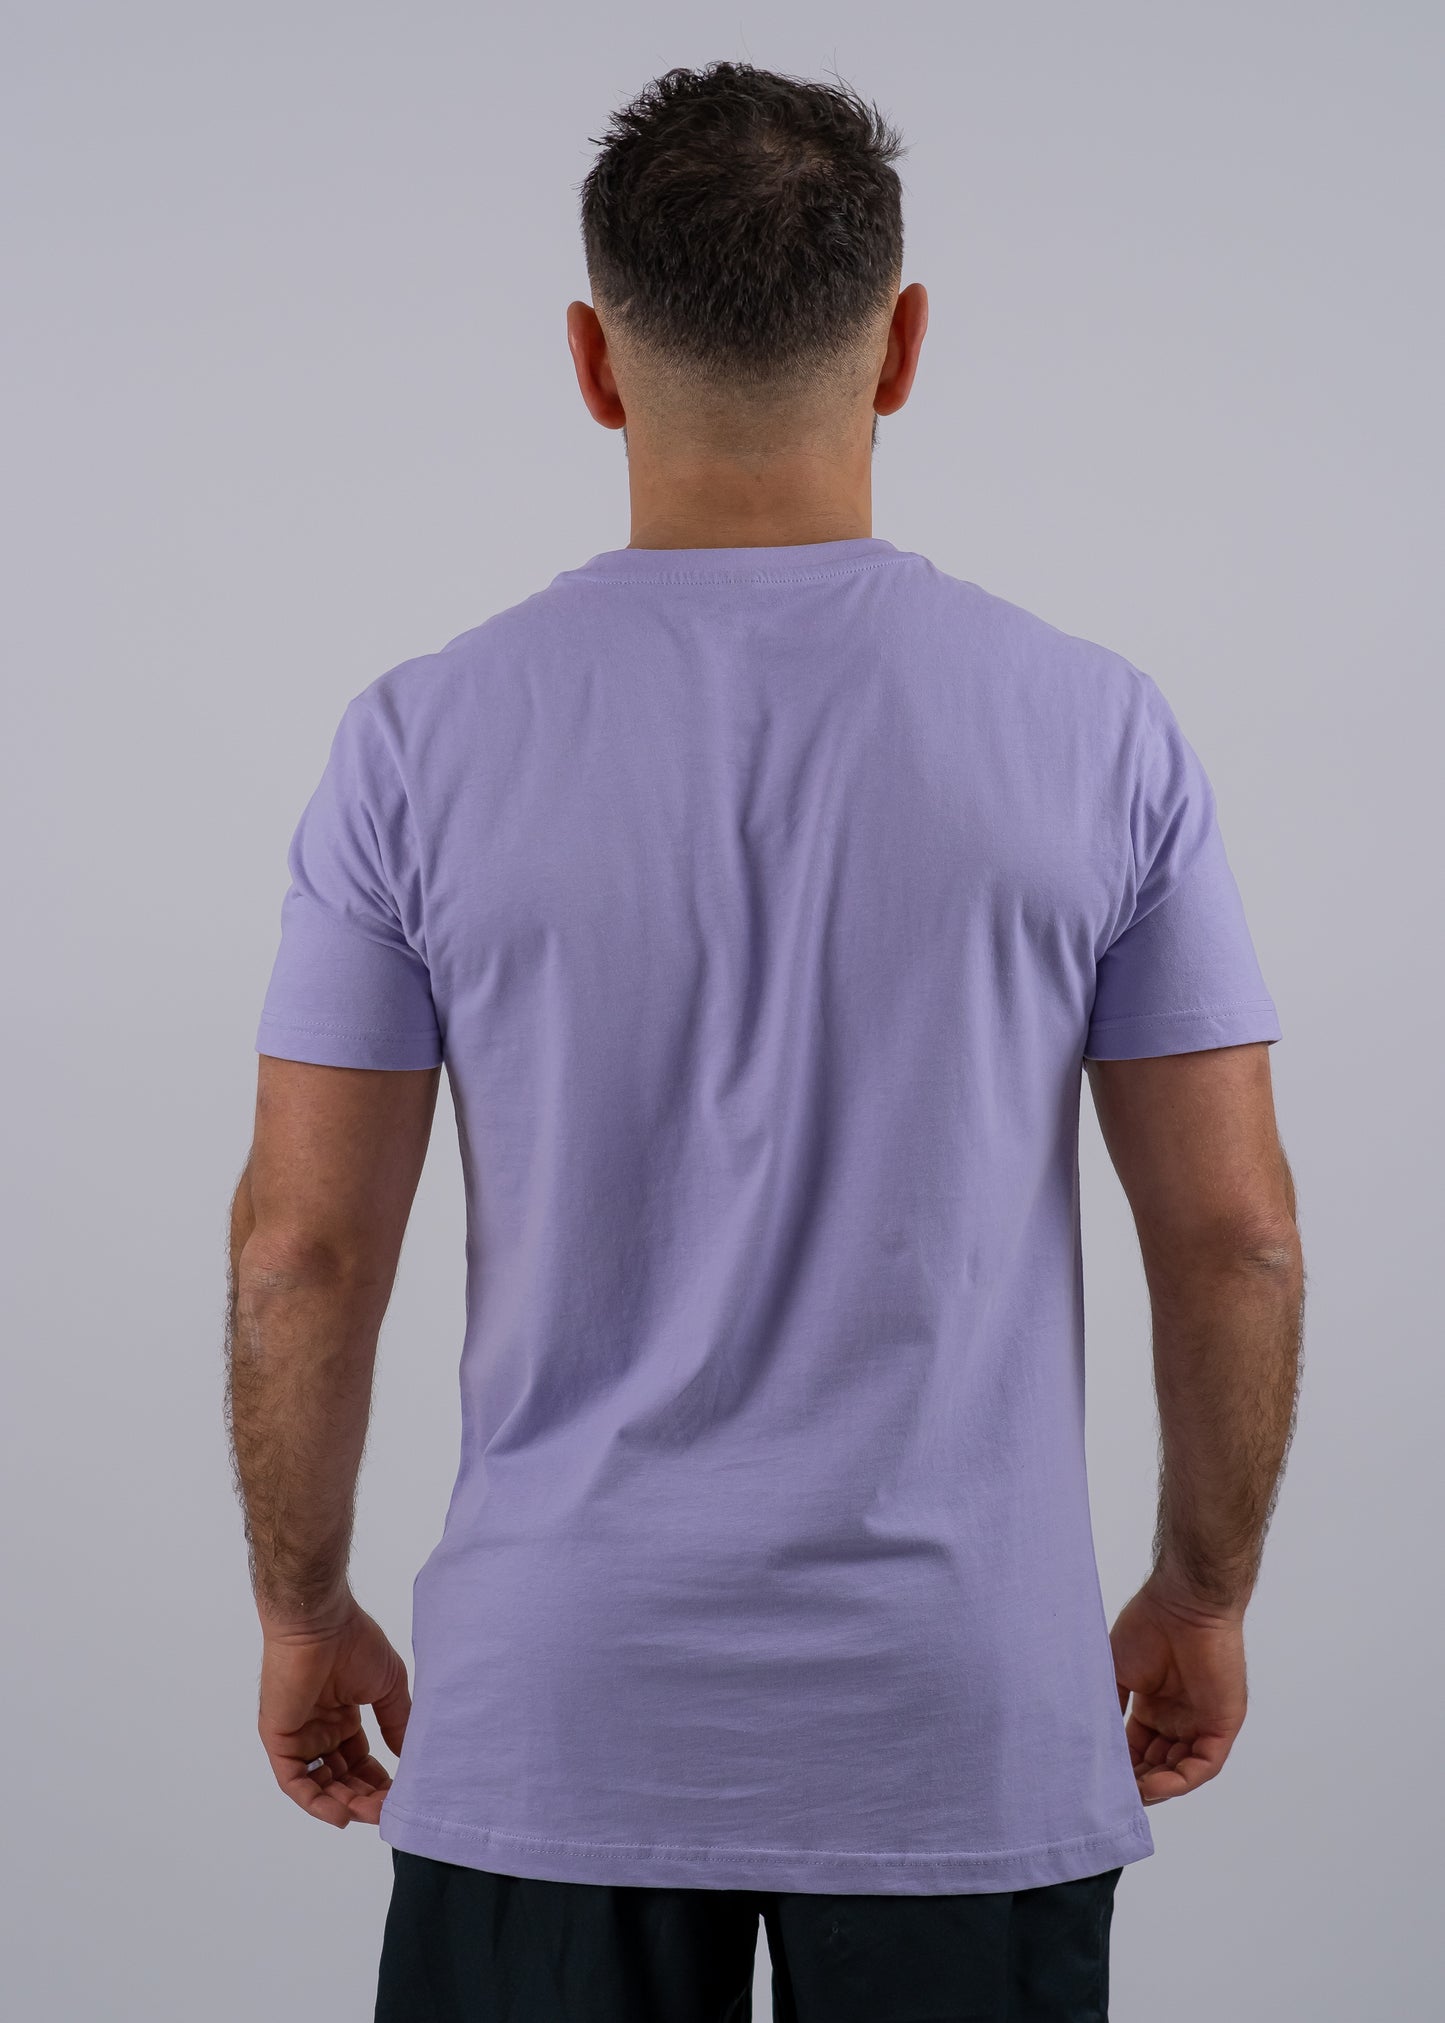 T-shirt STENSED Original Purple